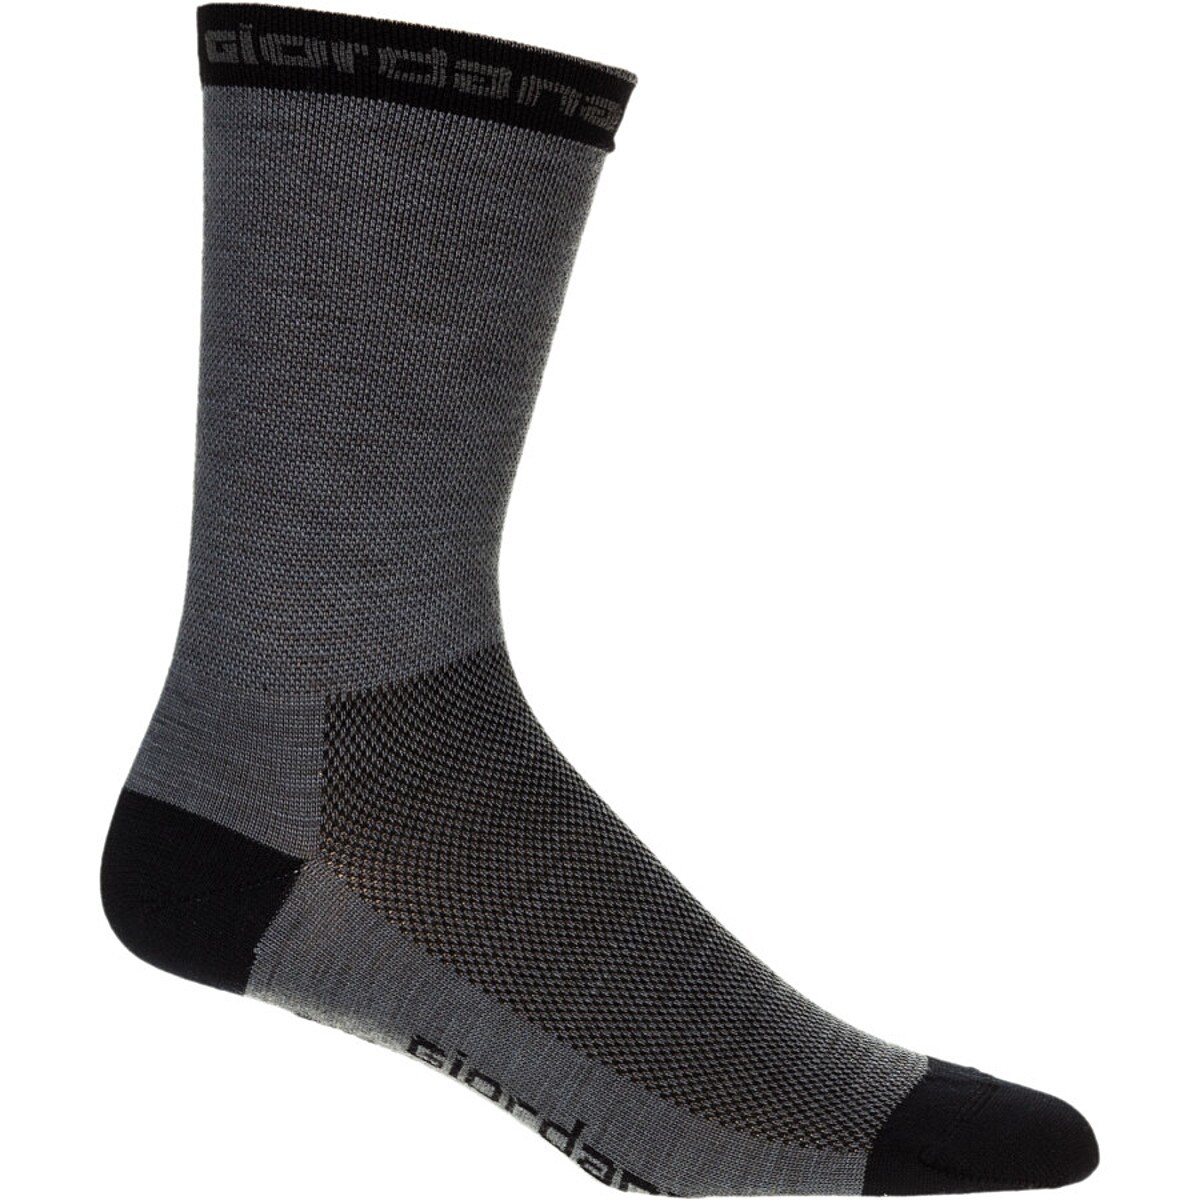 Giordana Merino Wool Tall Socks - Men's